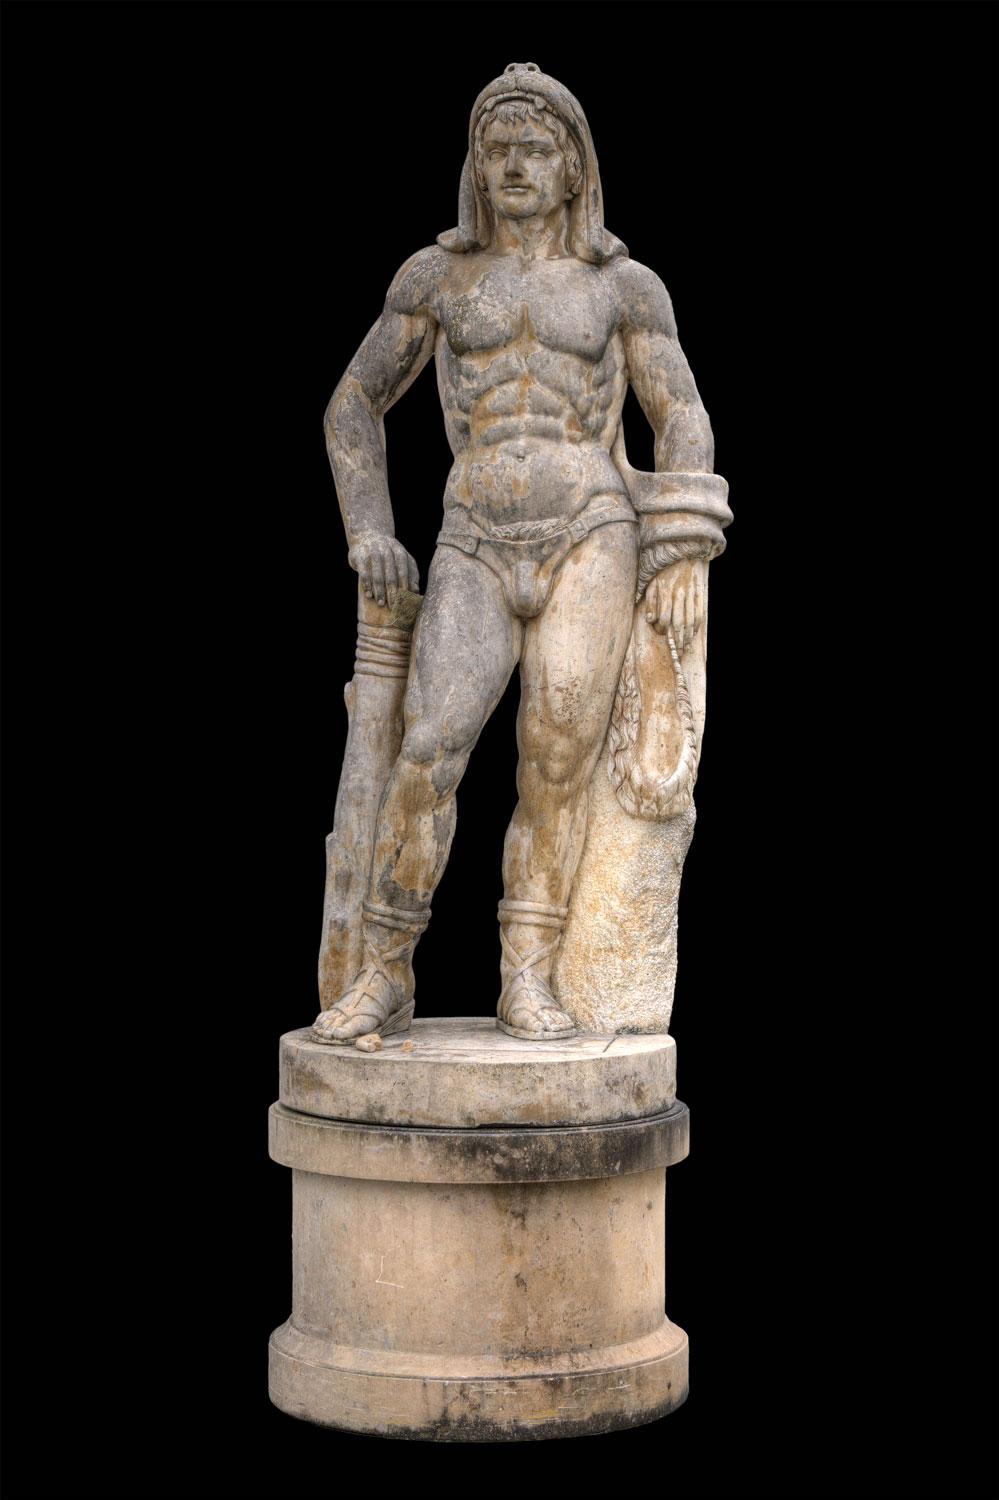  Figuratif figuratif italien en marbre monumental de style rationaliste  Sculptures de nus en vente 1